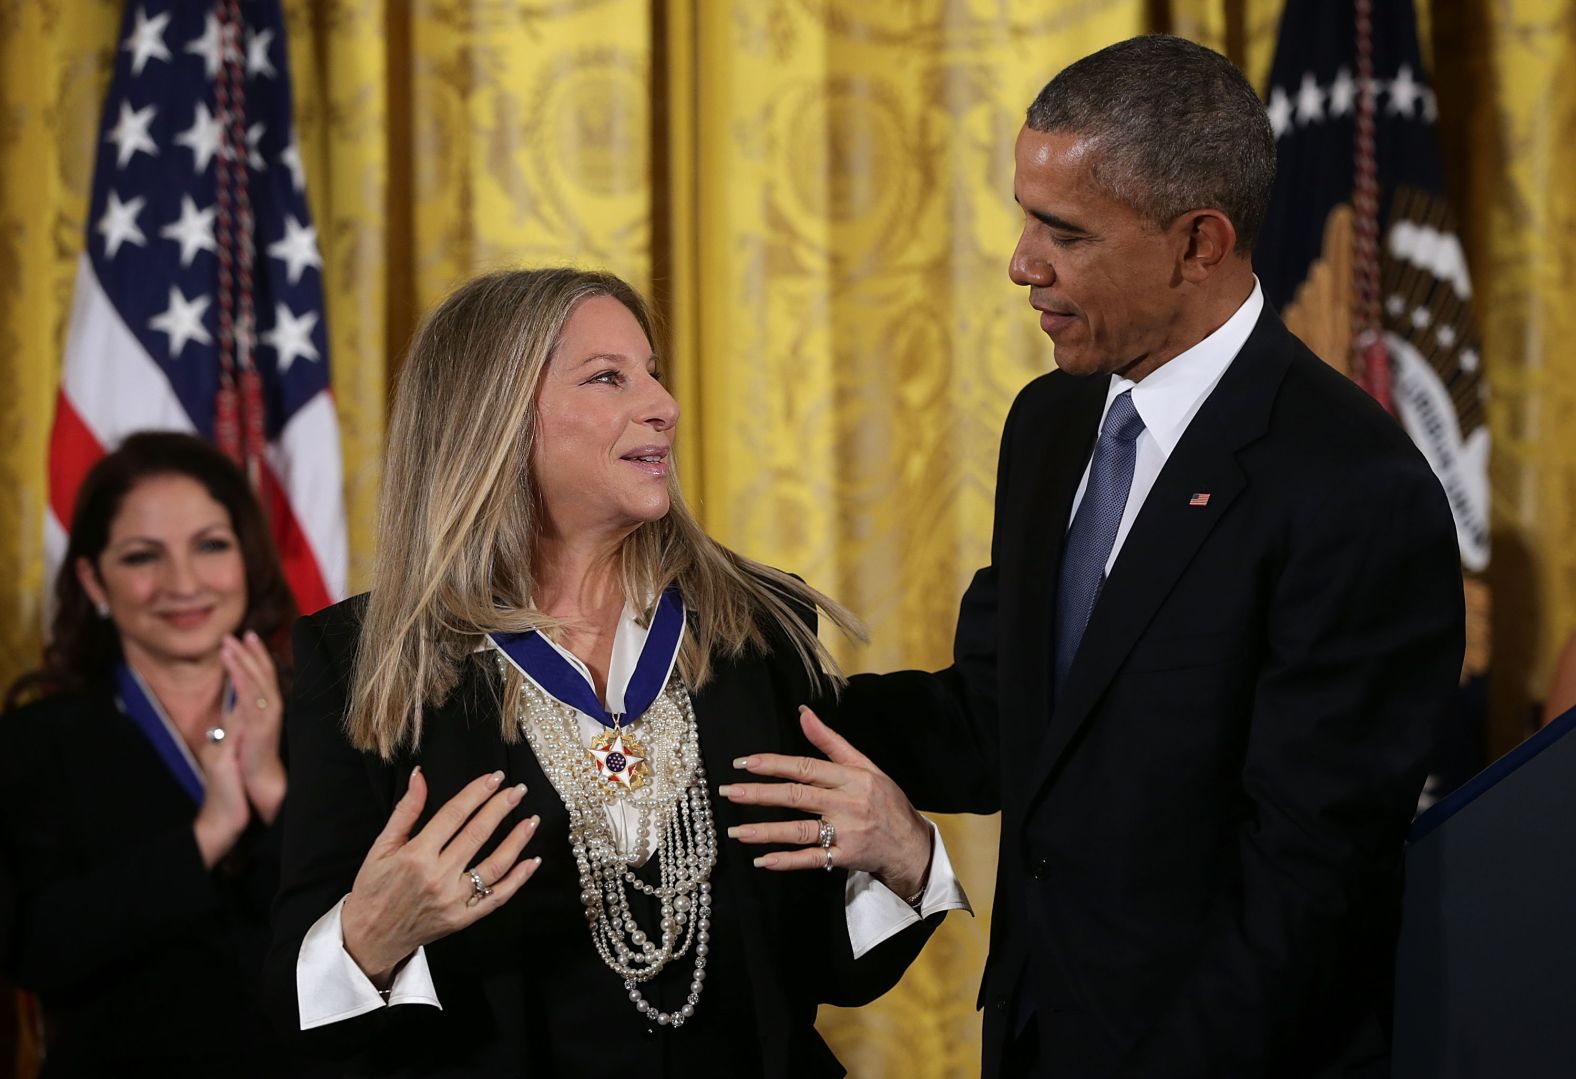 President Barack Obama presents the Presidential Medal of Freedom to Streisand in 2015.